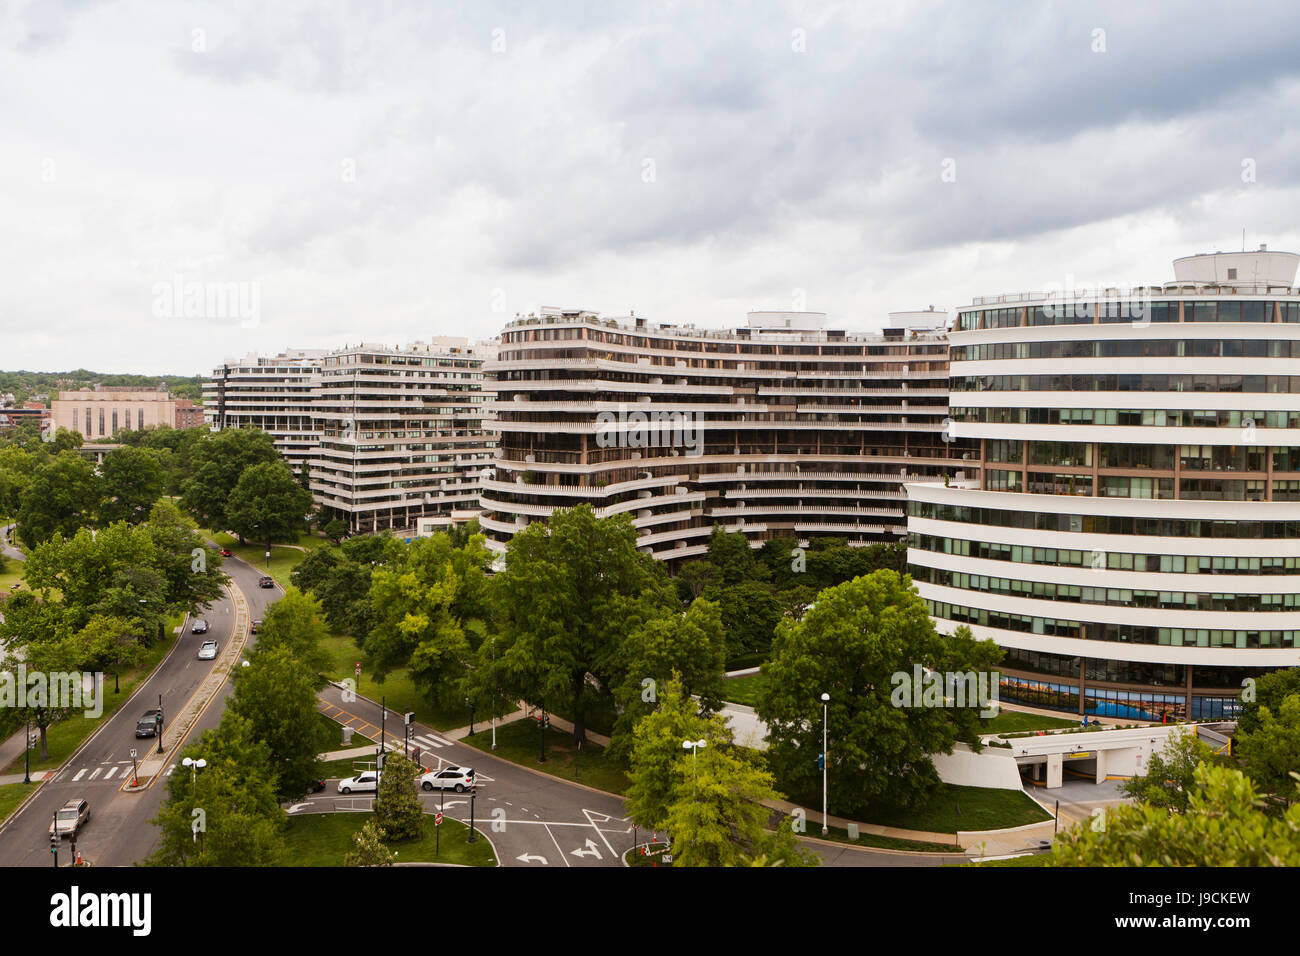 Watergate hotel building complex - Washington, DC USA Stock Photo